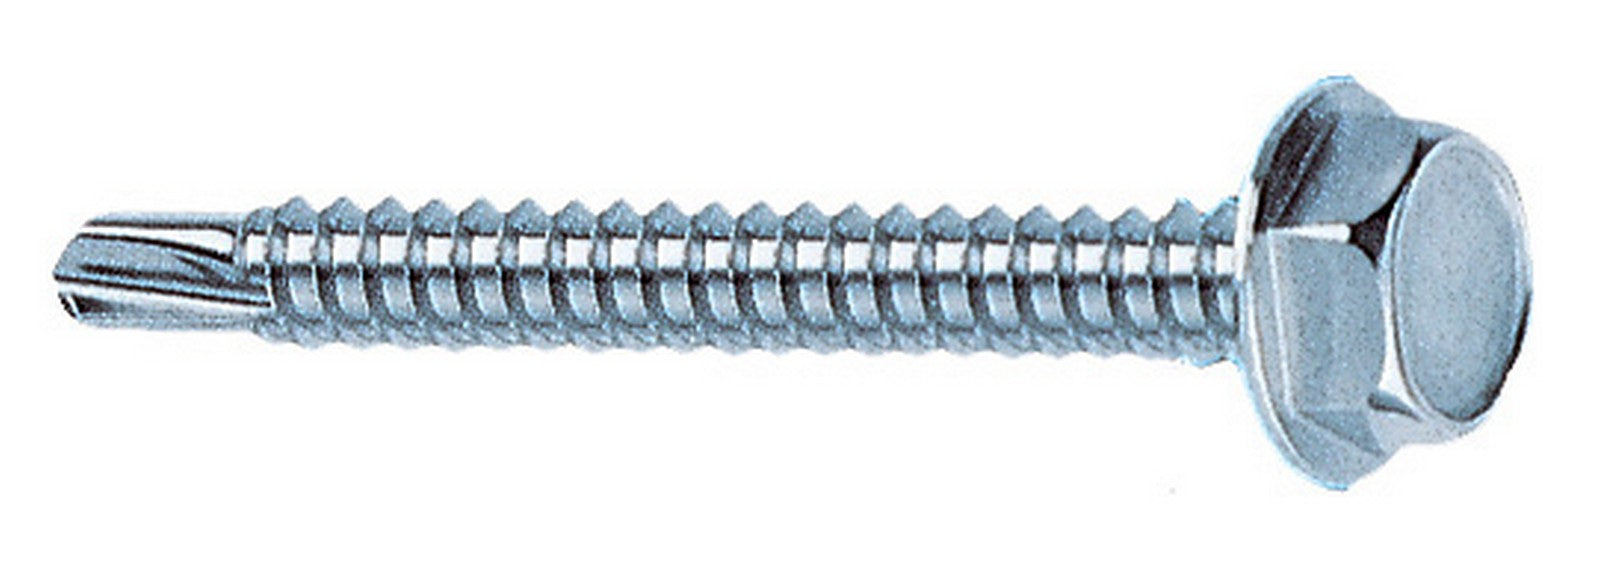 500pz drillex testa esagonale con collare k7 autoperforanti 4,2x19 cod:ferx.1340